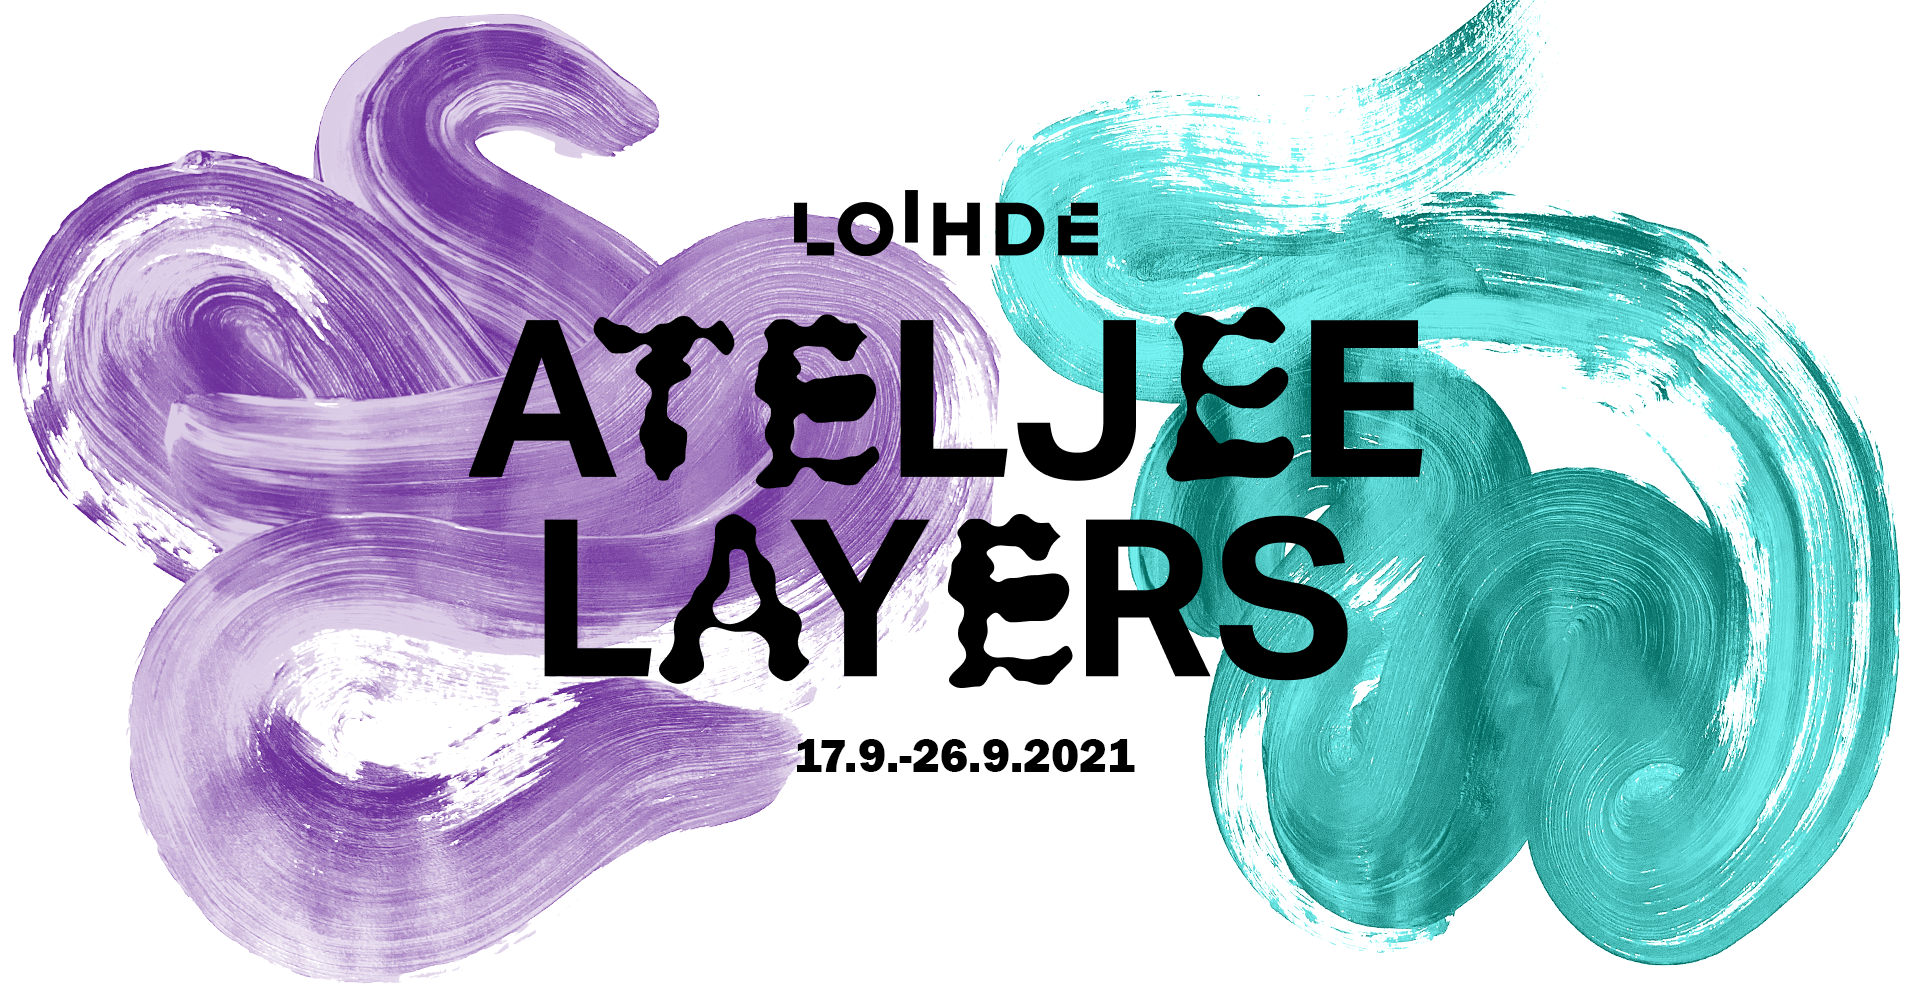 Loihde Ateljee, Layers, 17.-26.9.2021